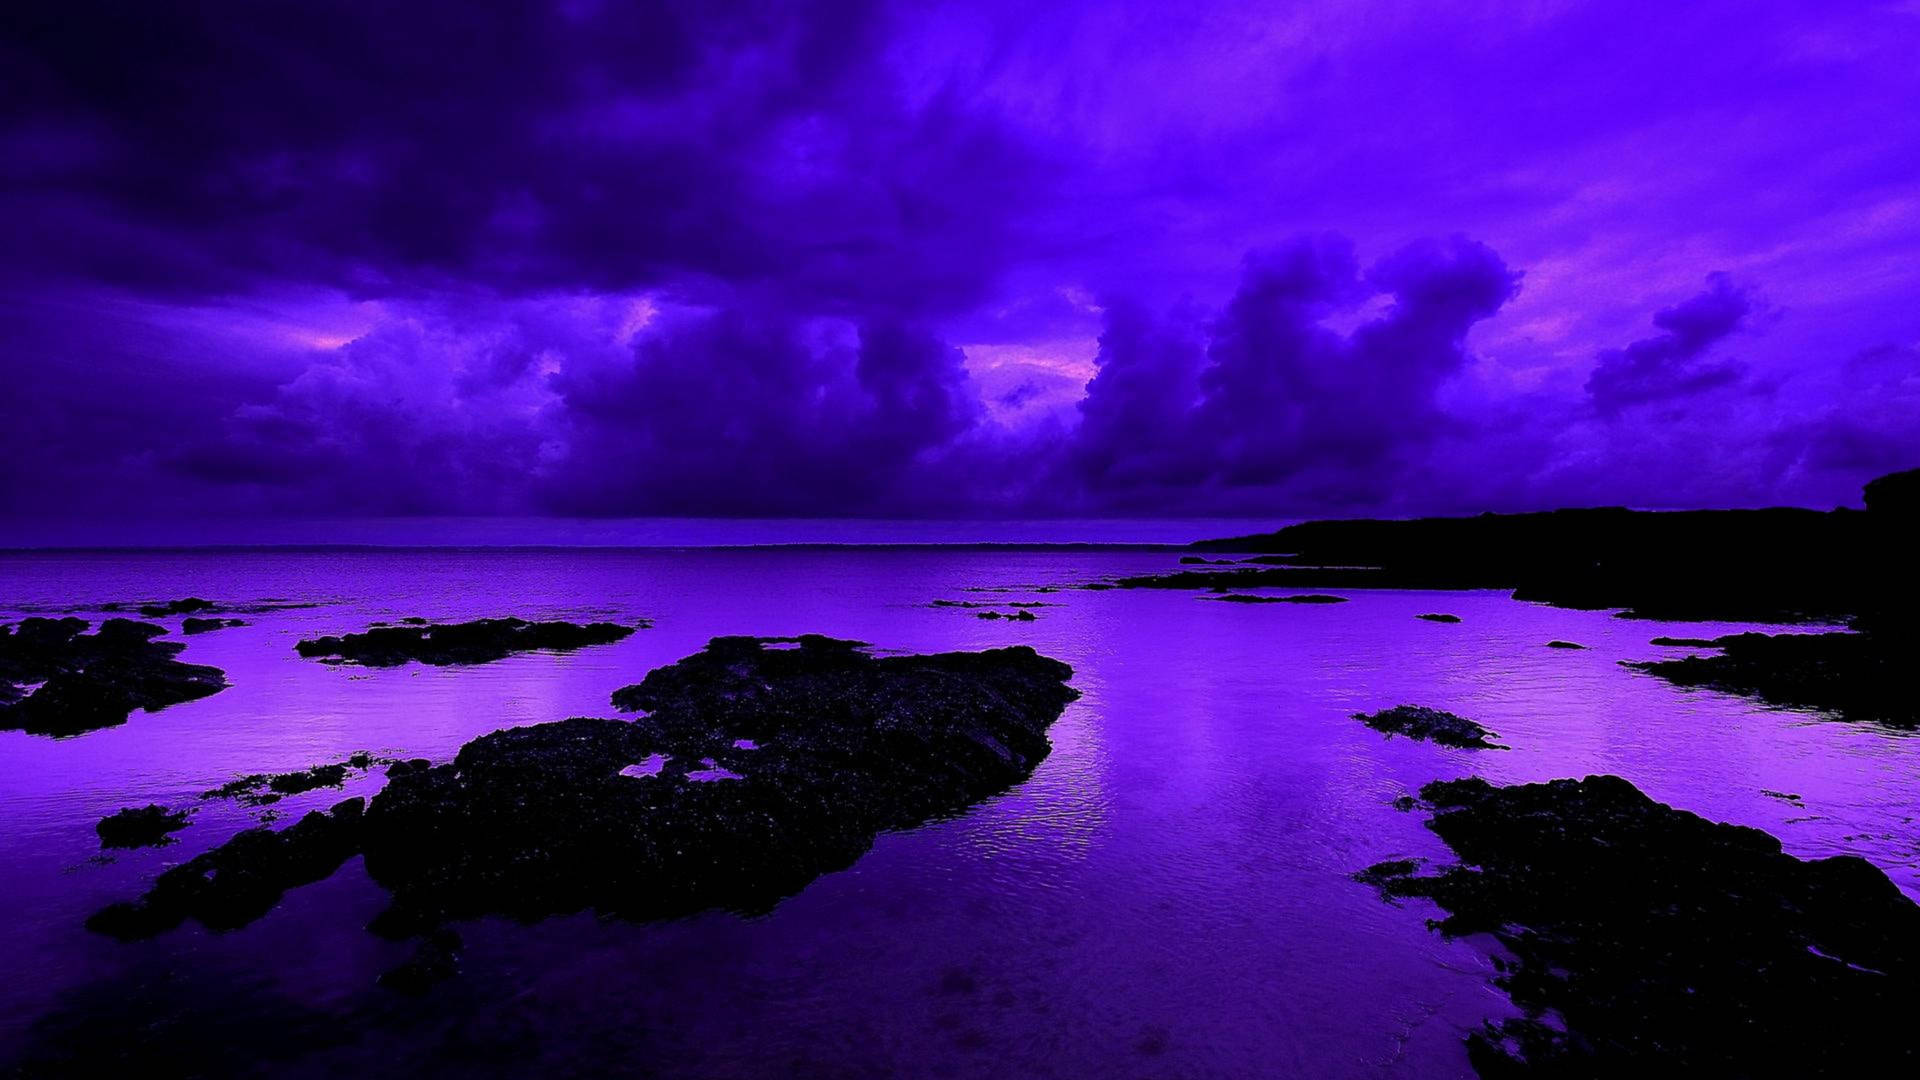 Violet Aesthetic Beach Night Sky Background